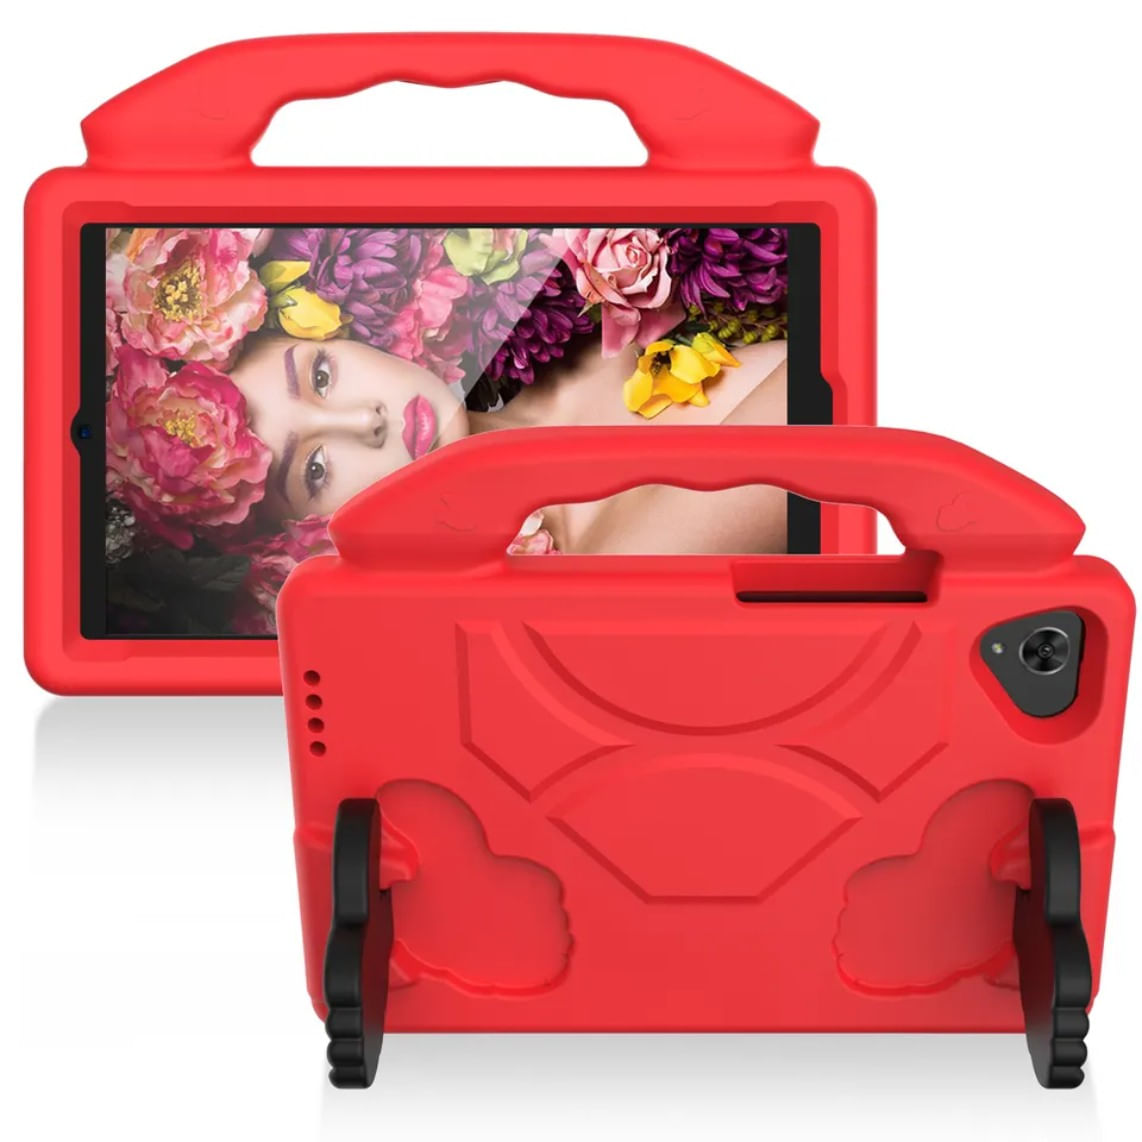 Funda de Goma con Diseño Like para Tablet Lenovo M7 Rojo